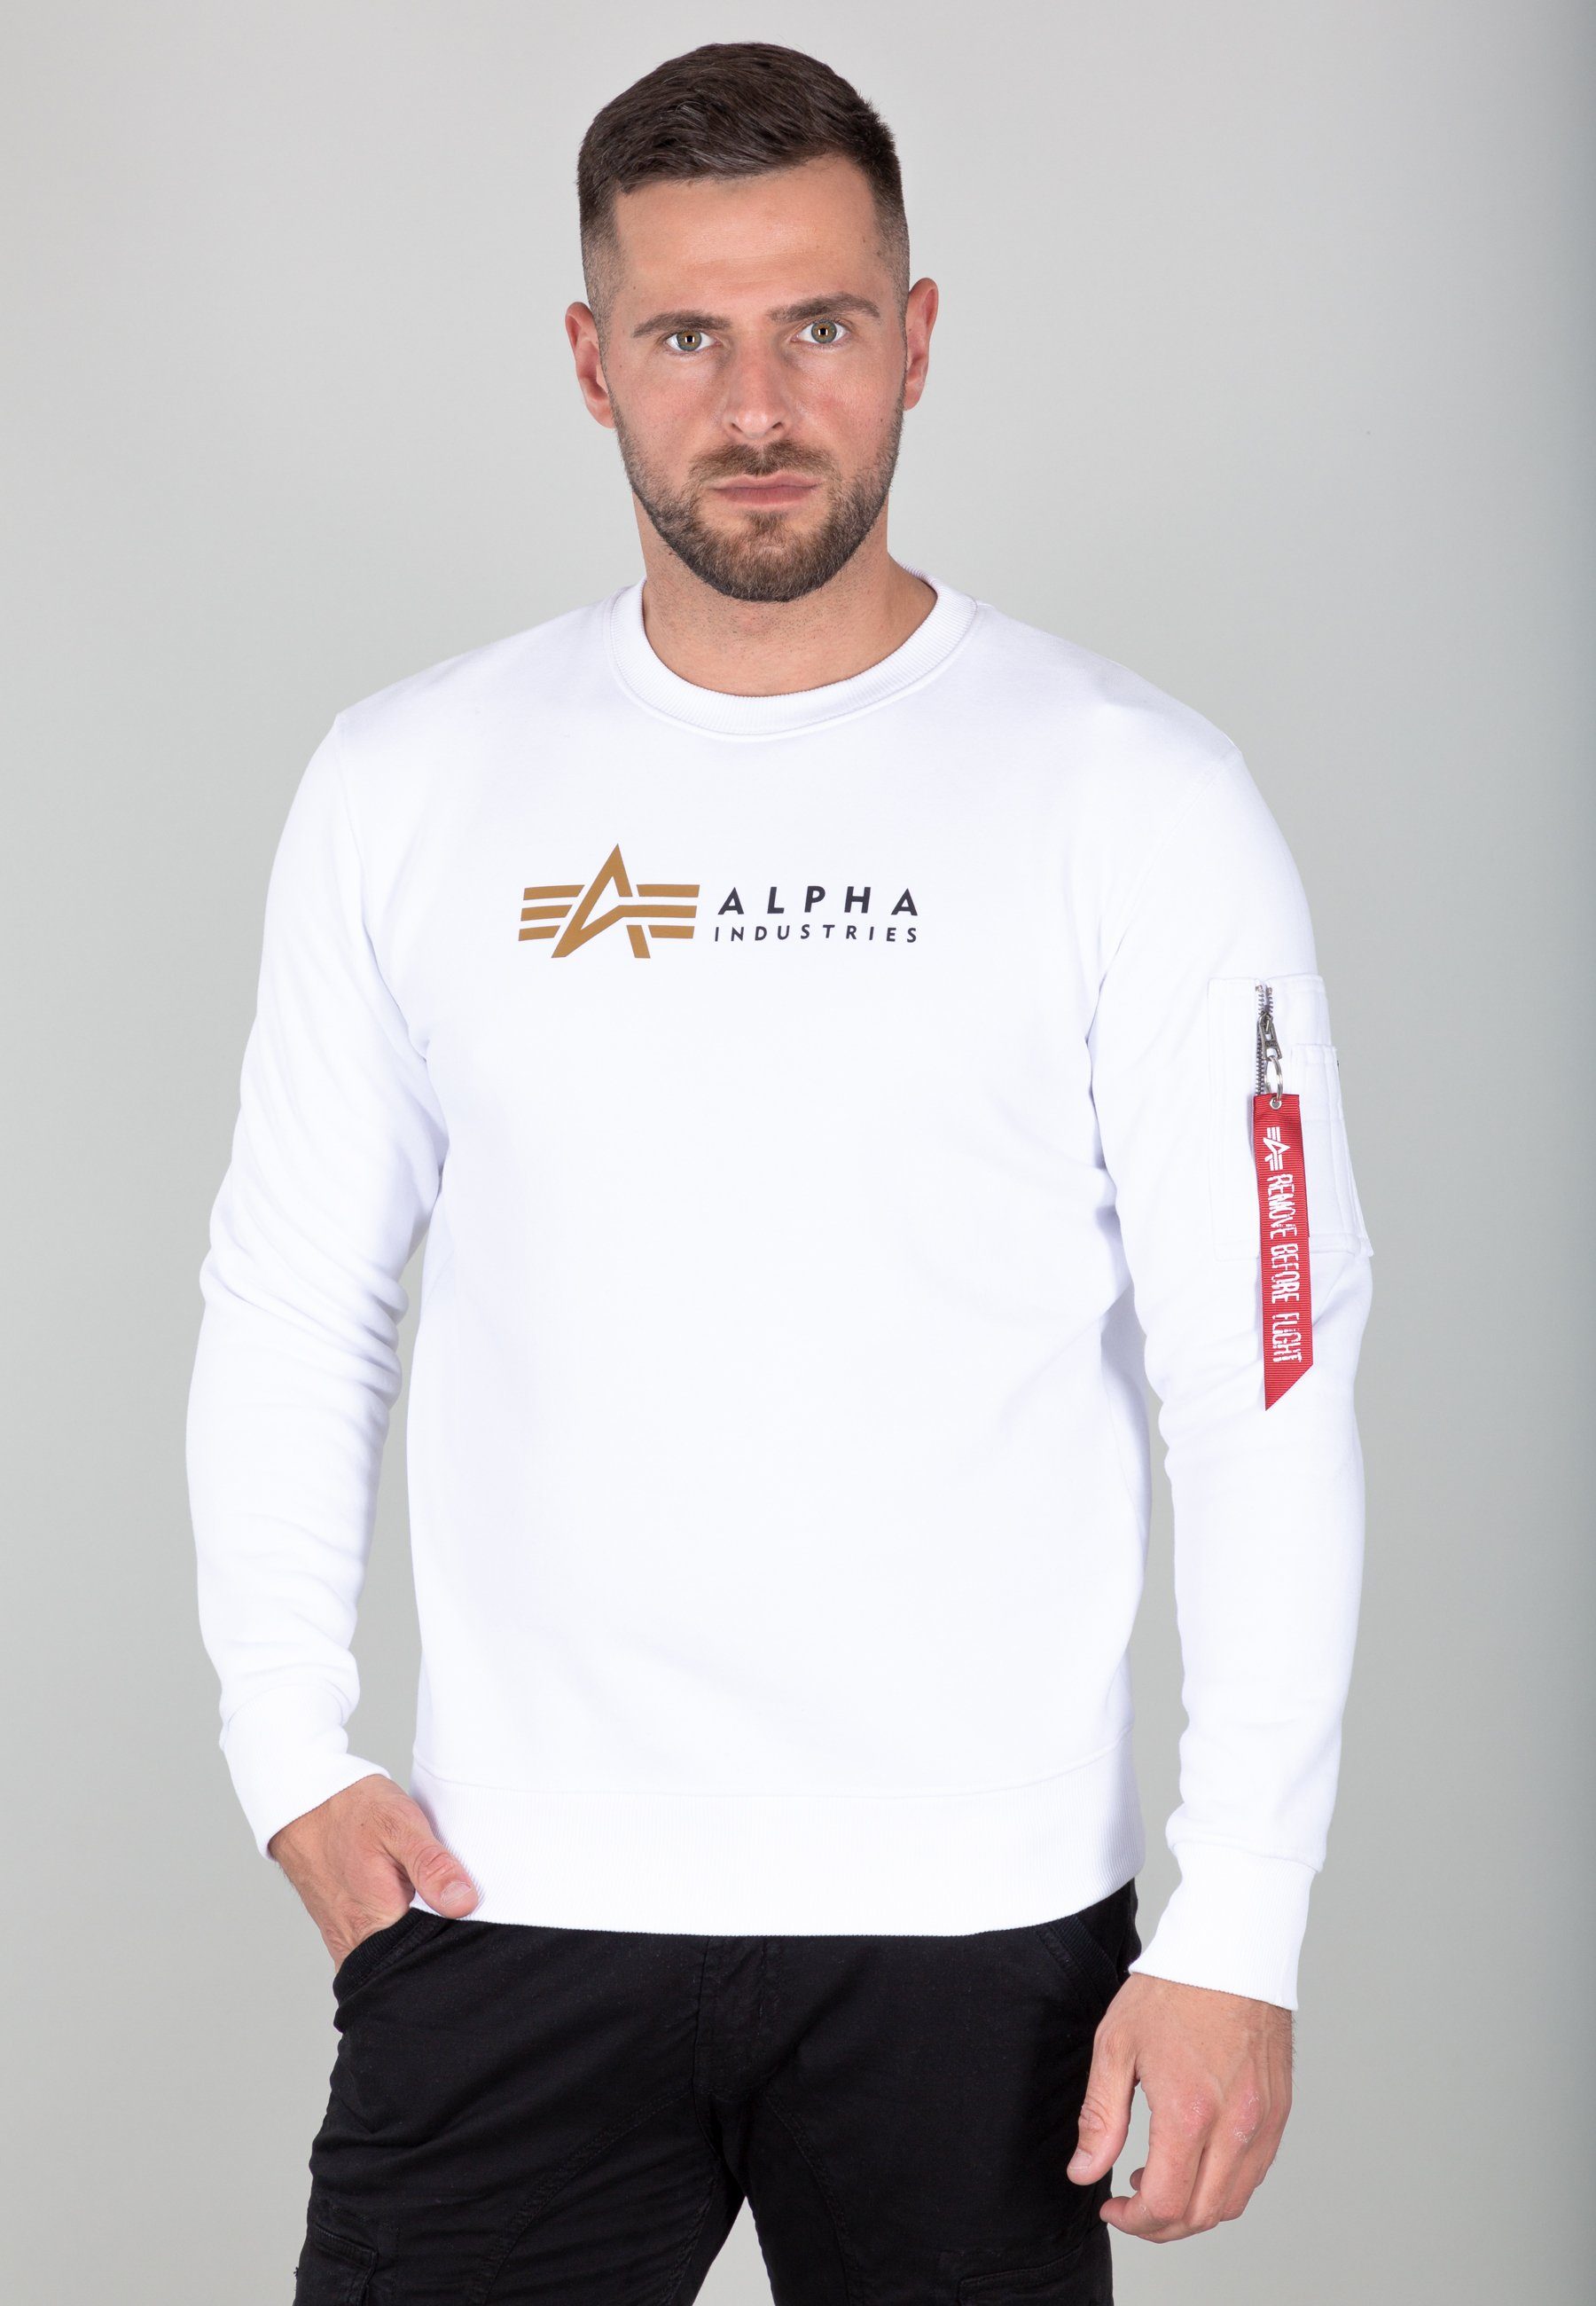 Alpha Industries Sweater Men white Industries Alpha - Sweatshirts Alpha Label Sweater